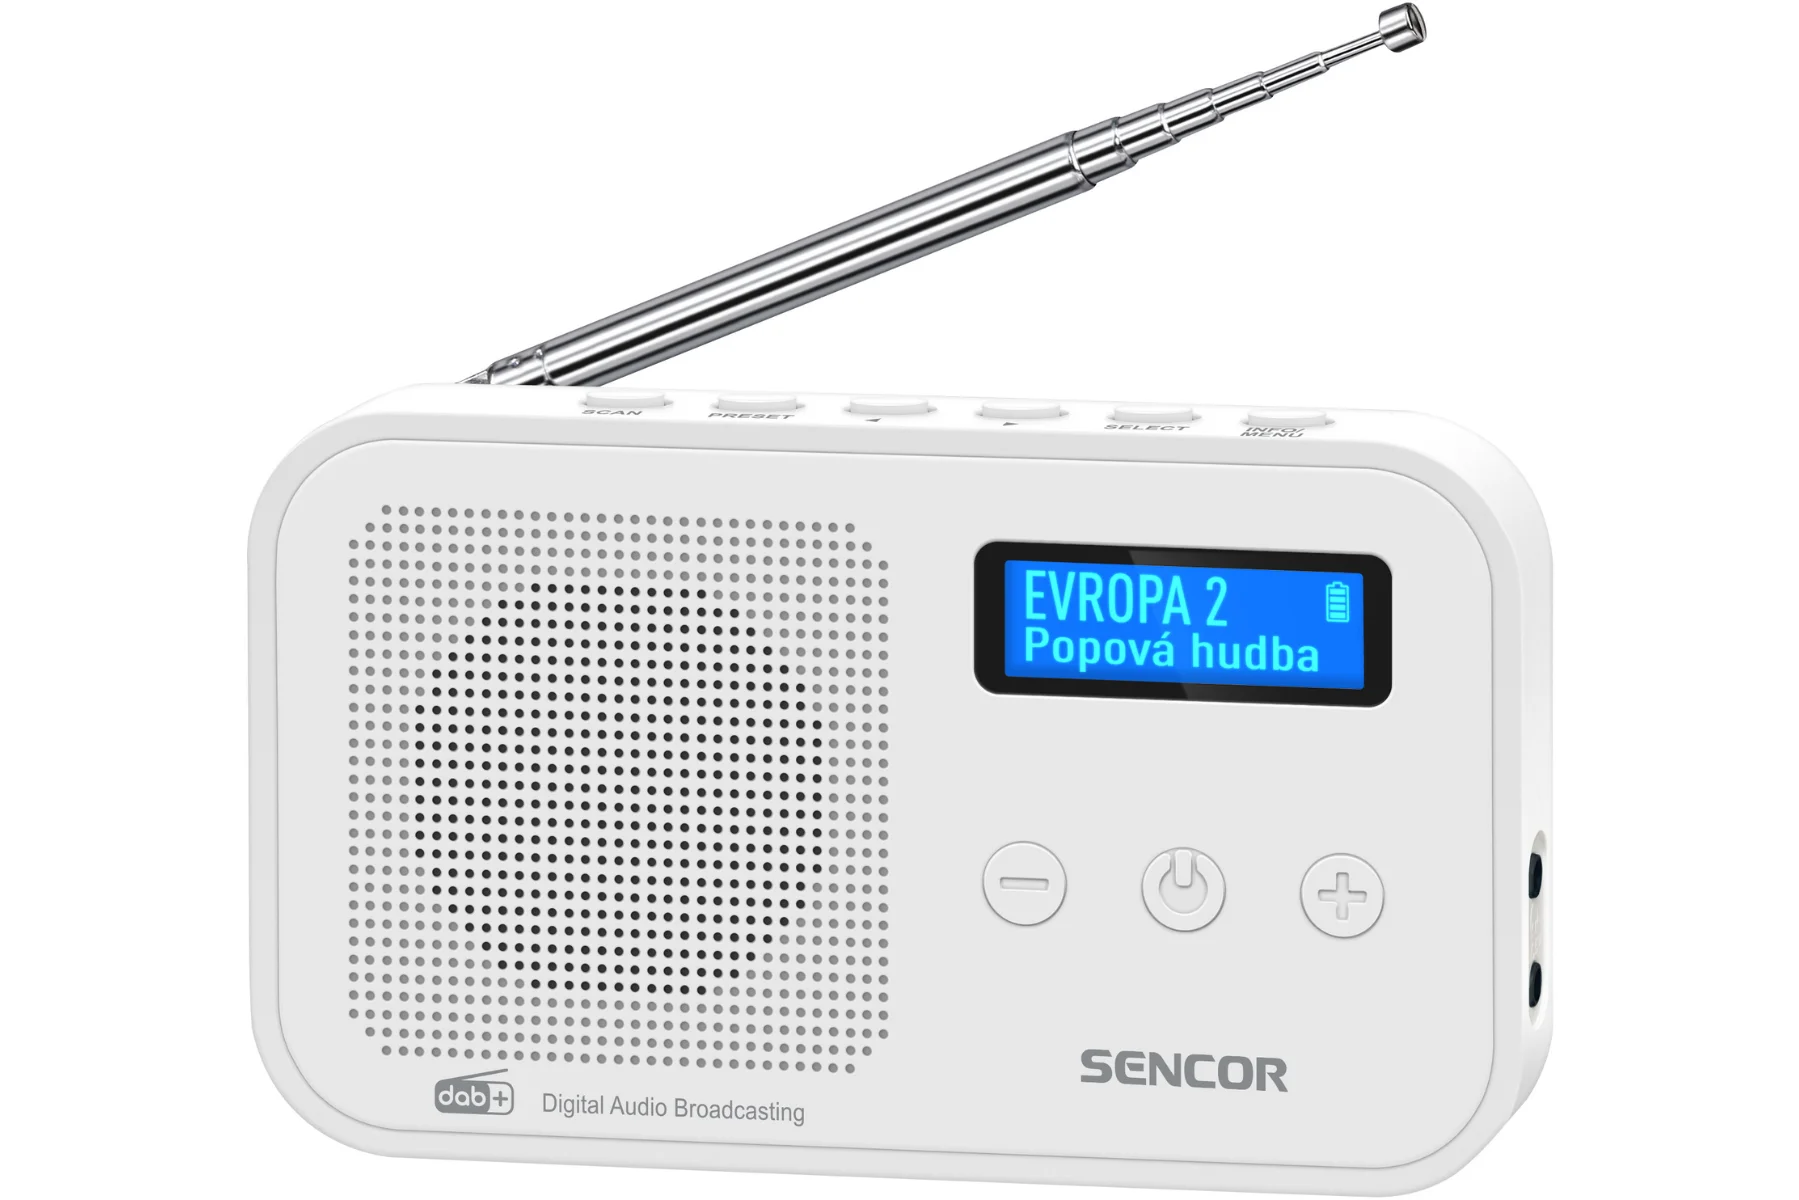 Digitálne rádio Sencor SRD 7200 W DAB+ prijem stanic ovladanie